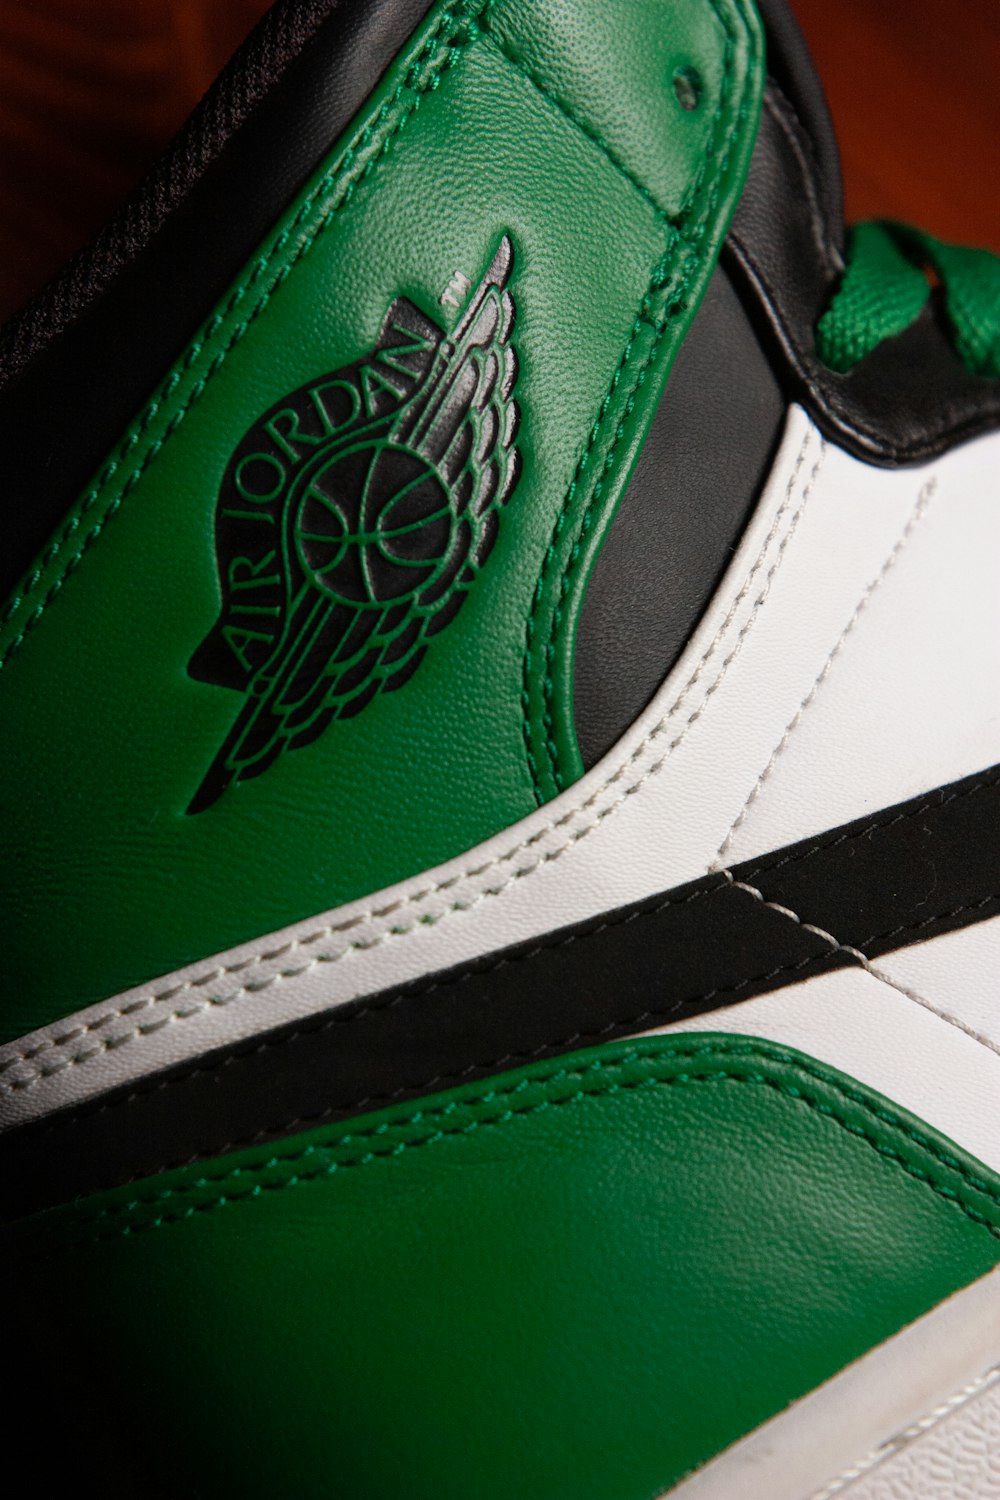 green and white nike shoe